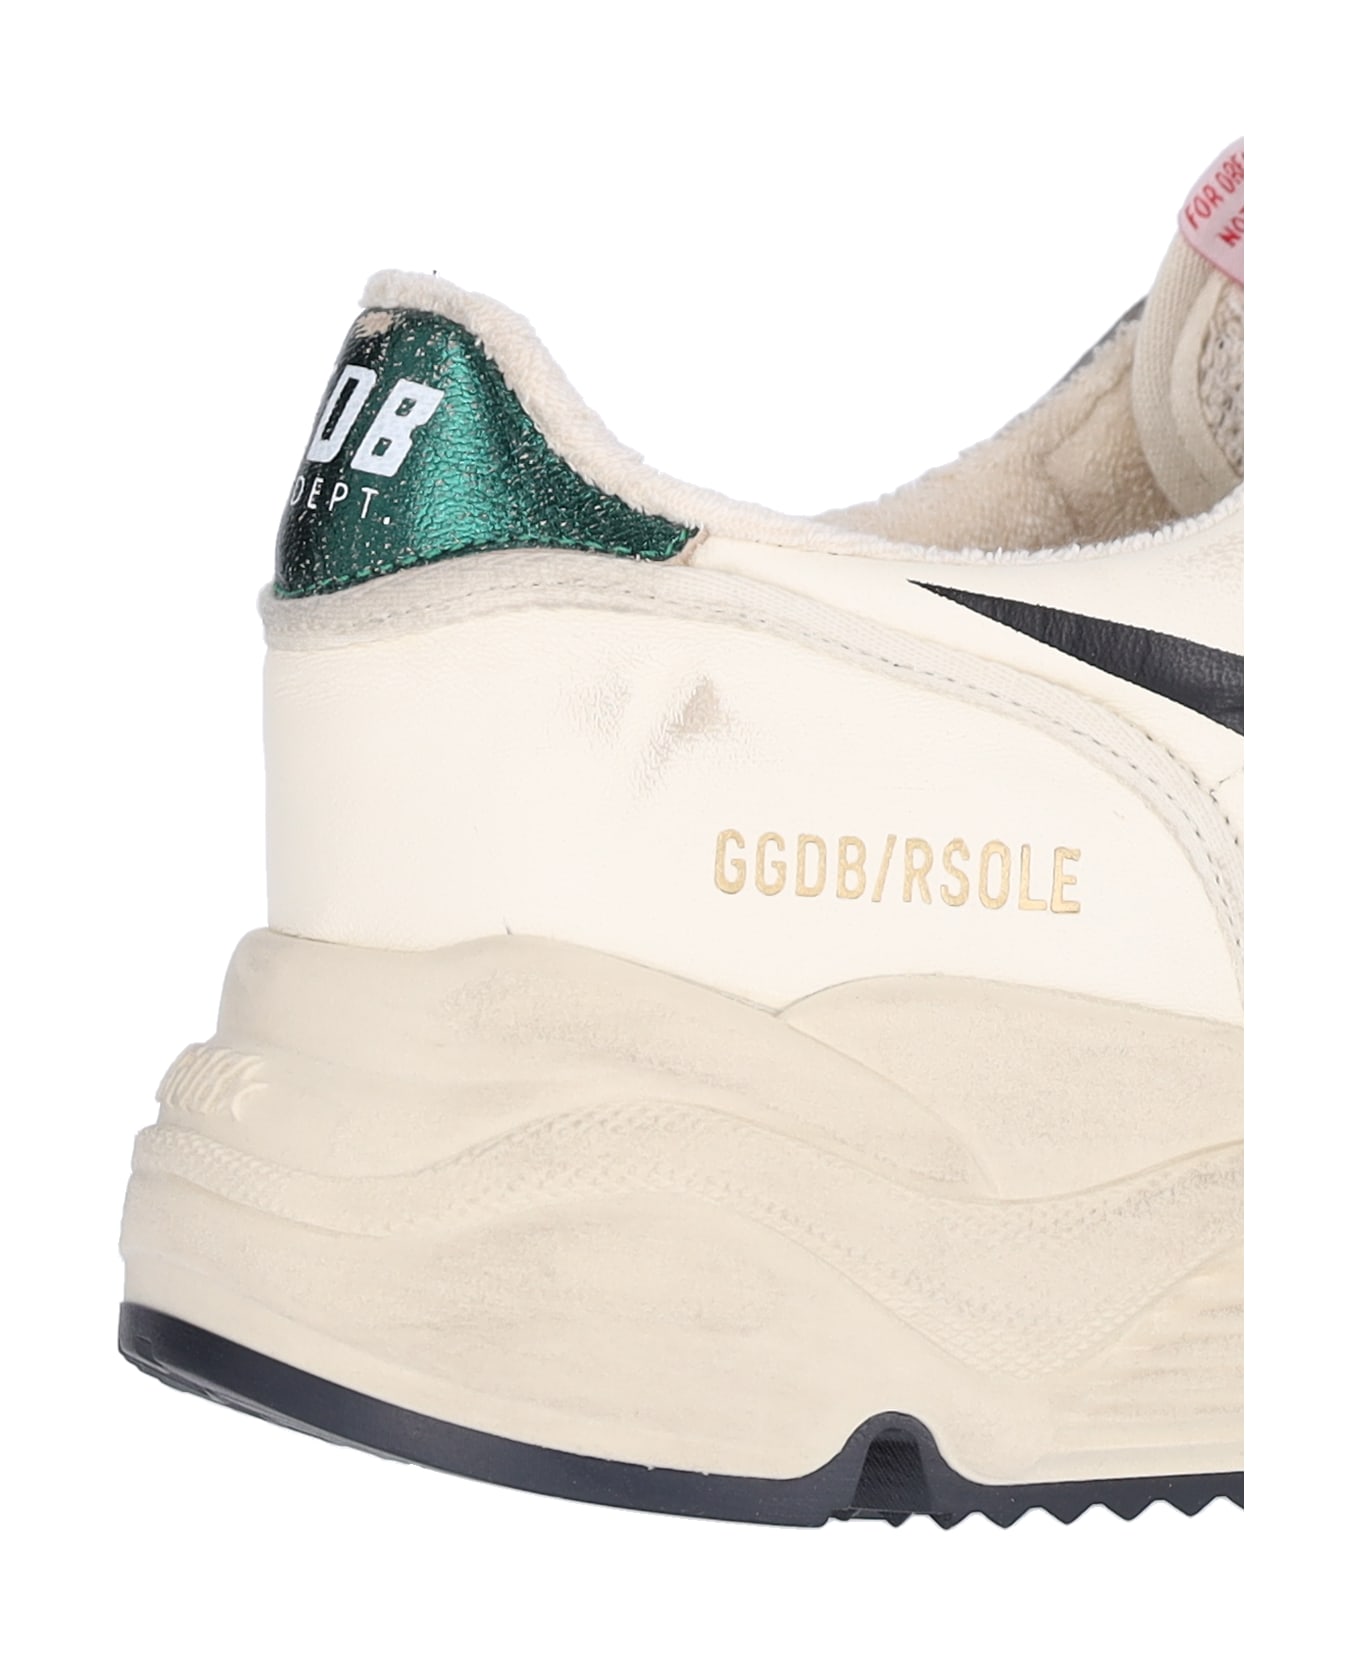 Golden Goose Running Sneakers - White/Black/Emerald